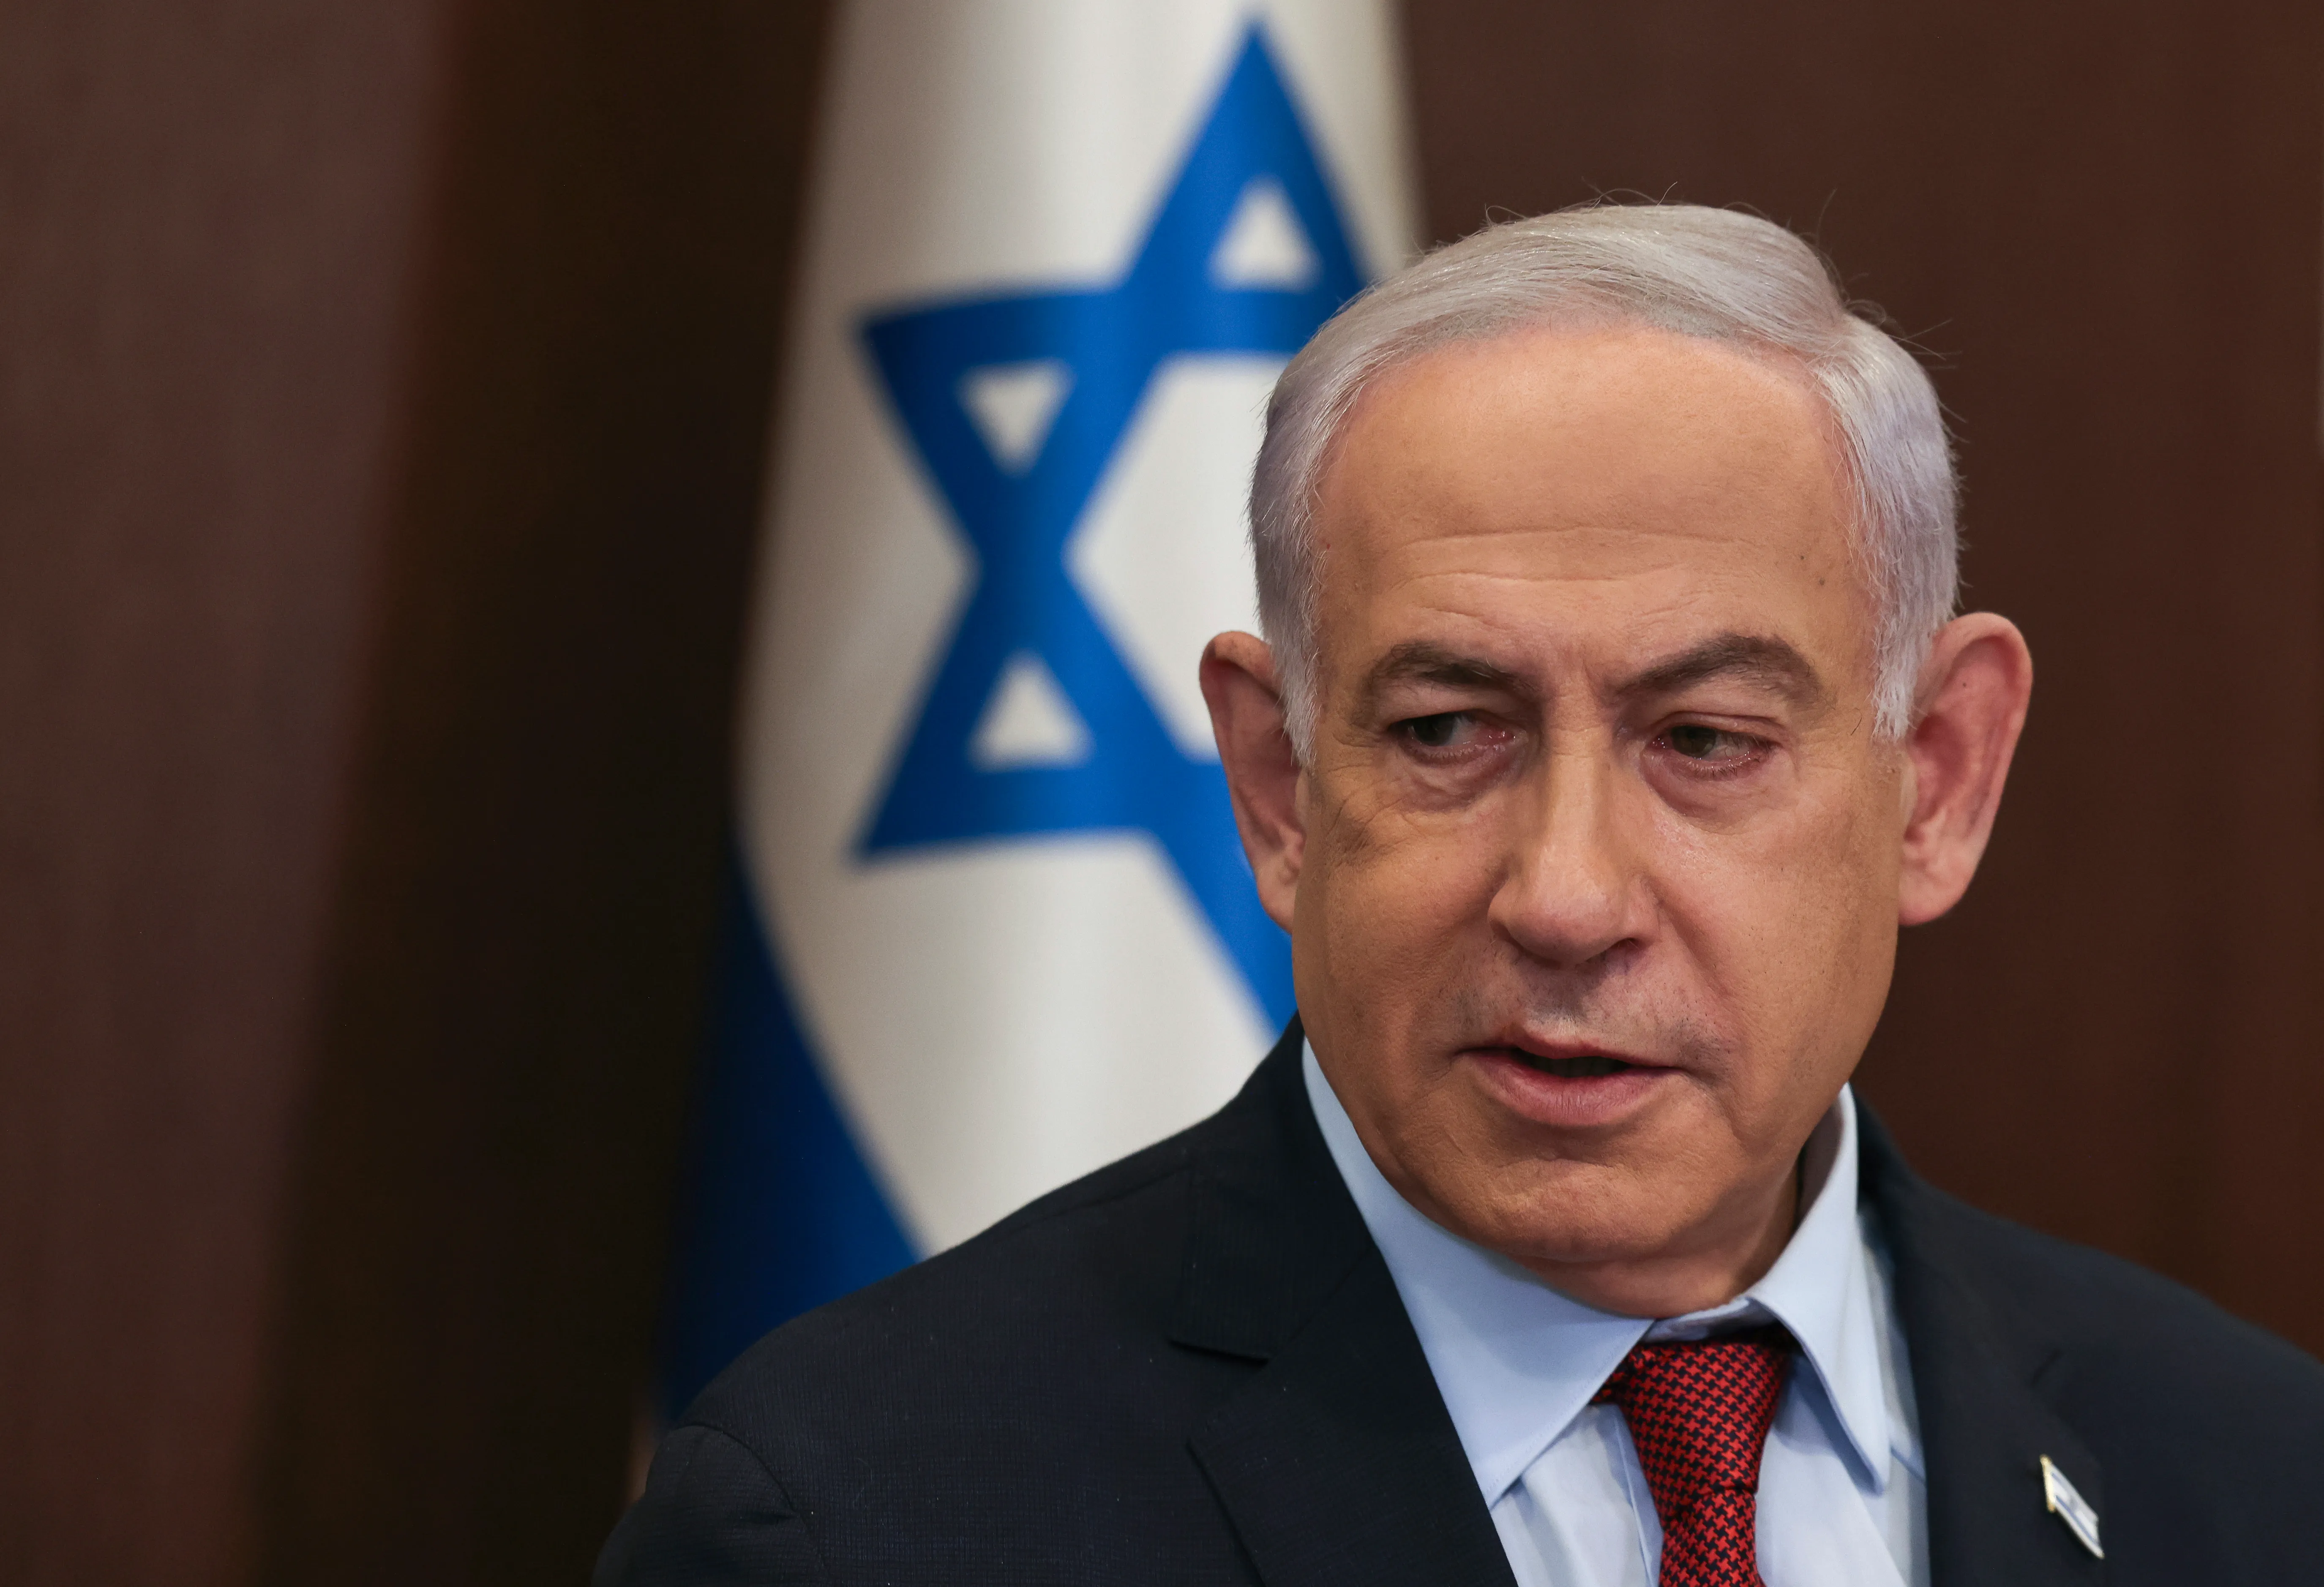 Netanyahu accused by Hamas of sabotaging truce talks 